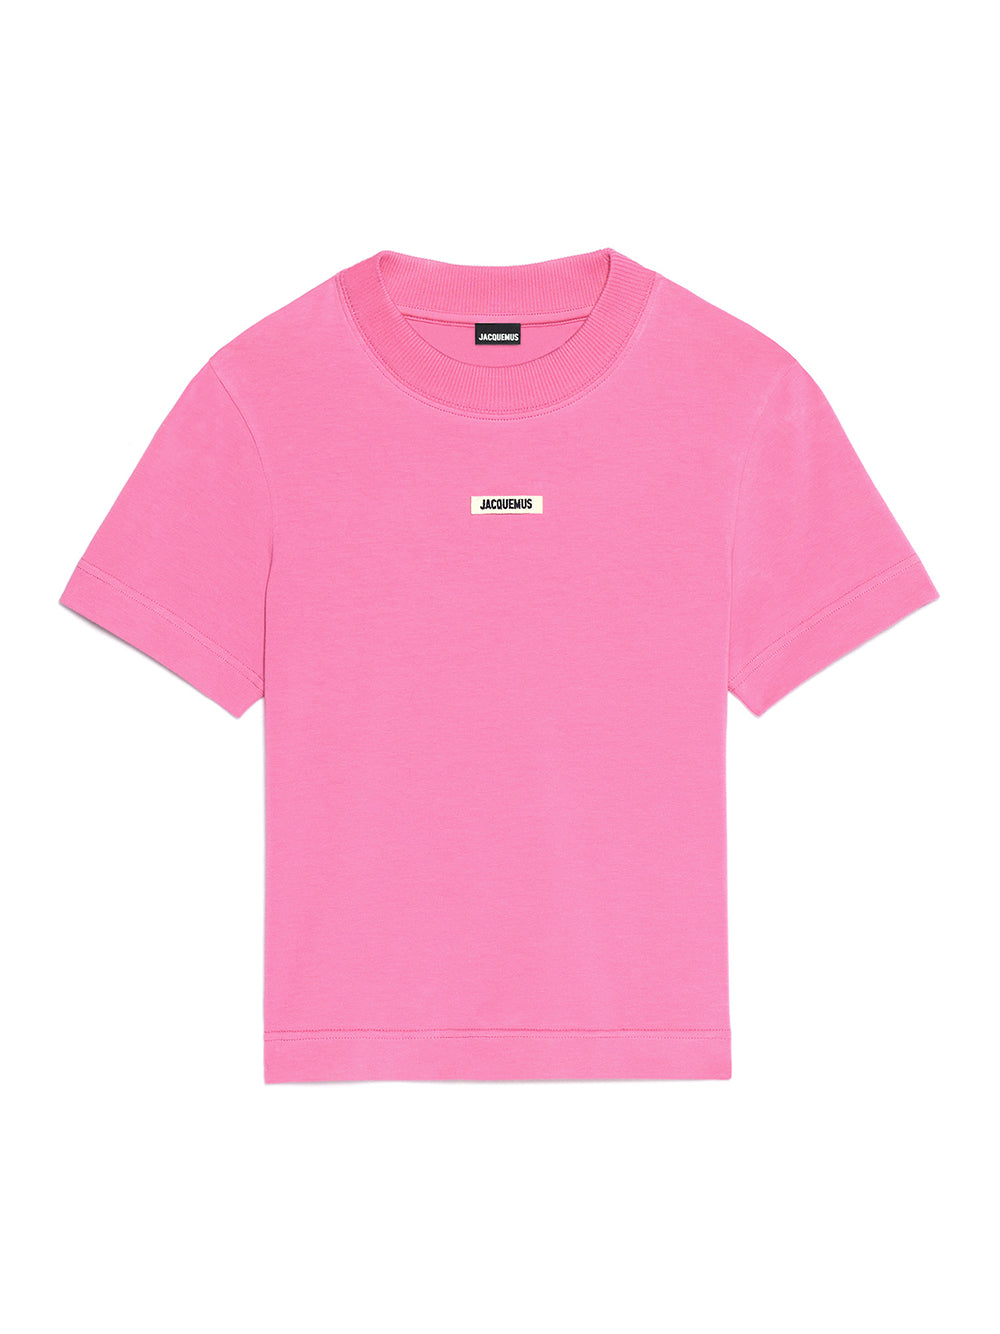 Le Tshirt Gros Grain Pink